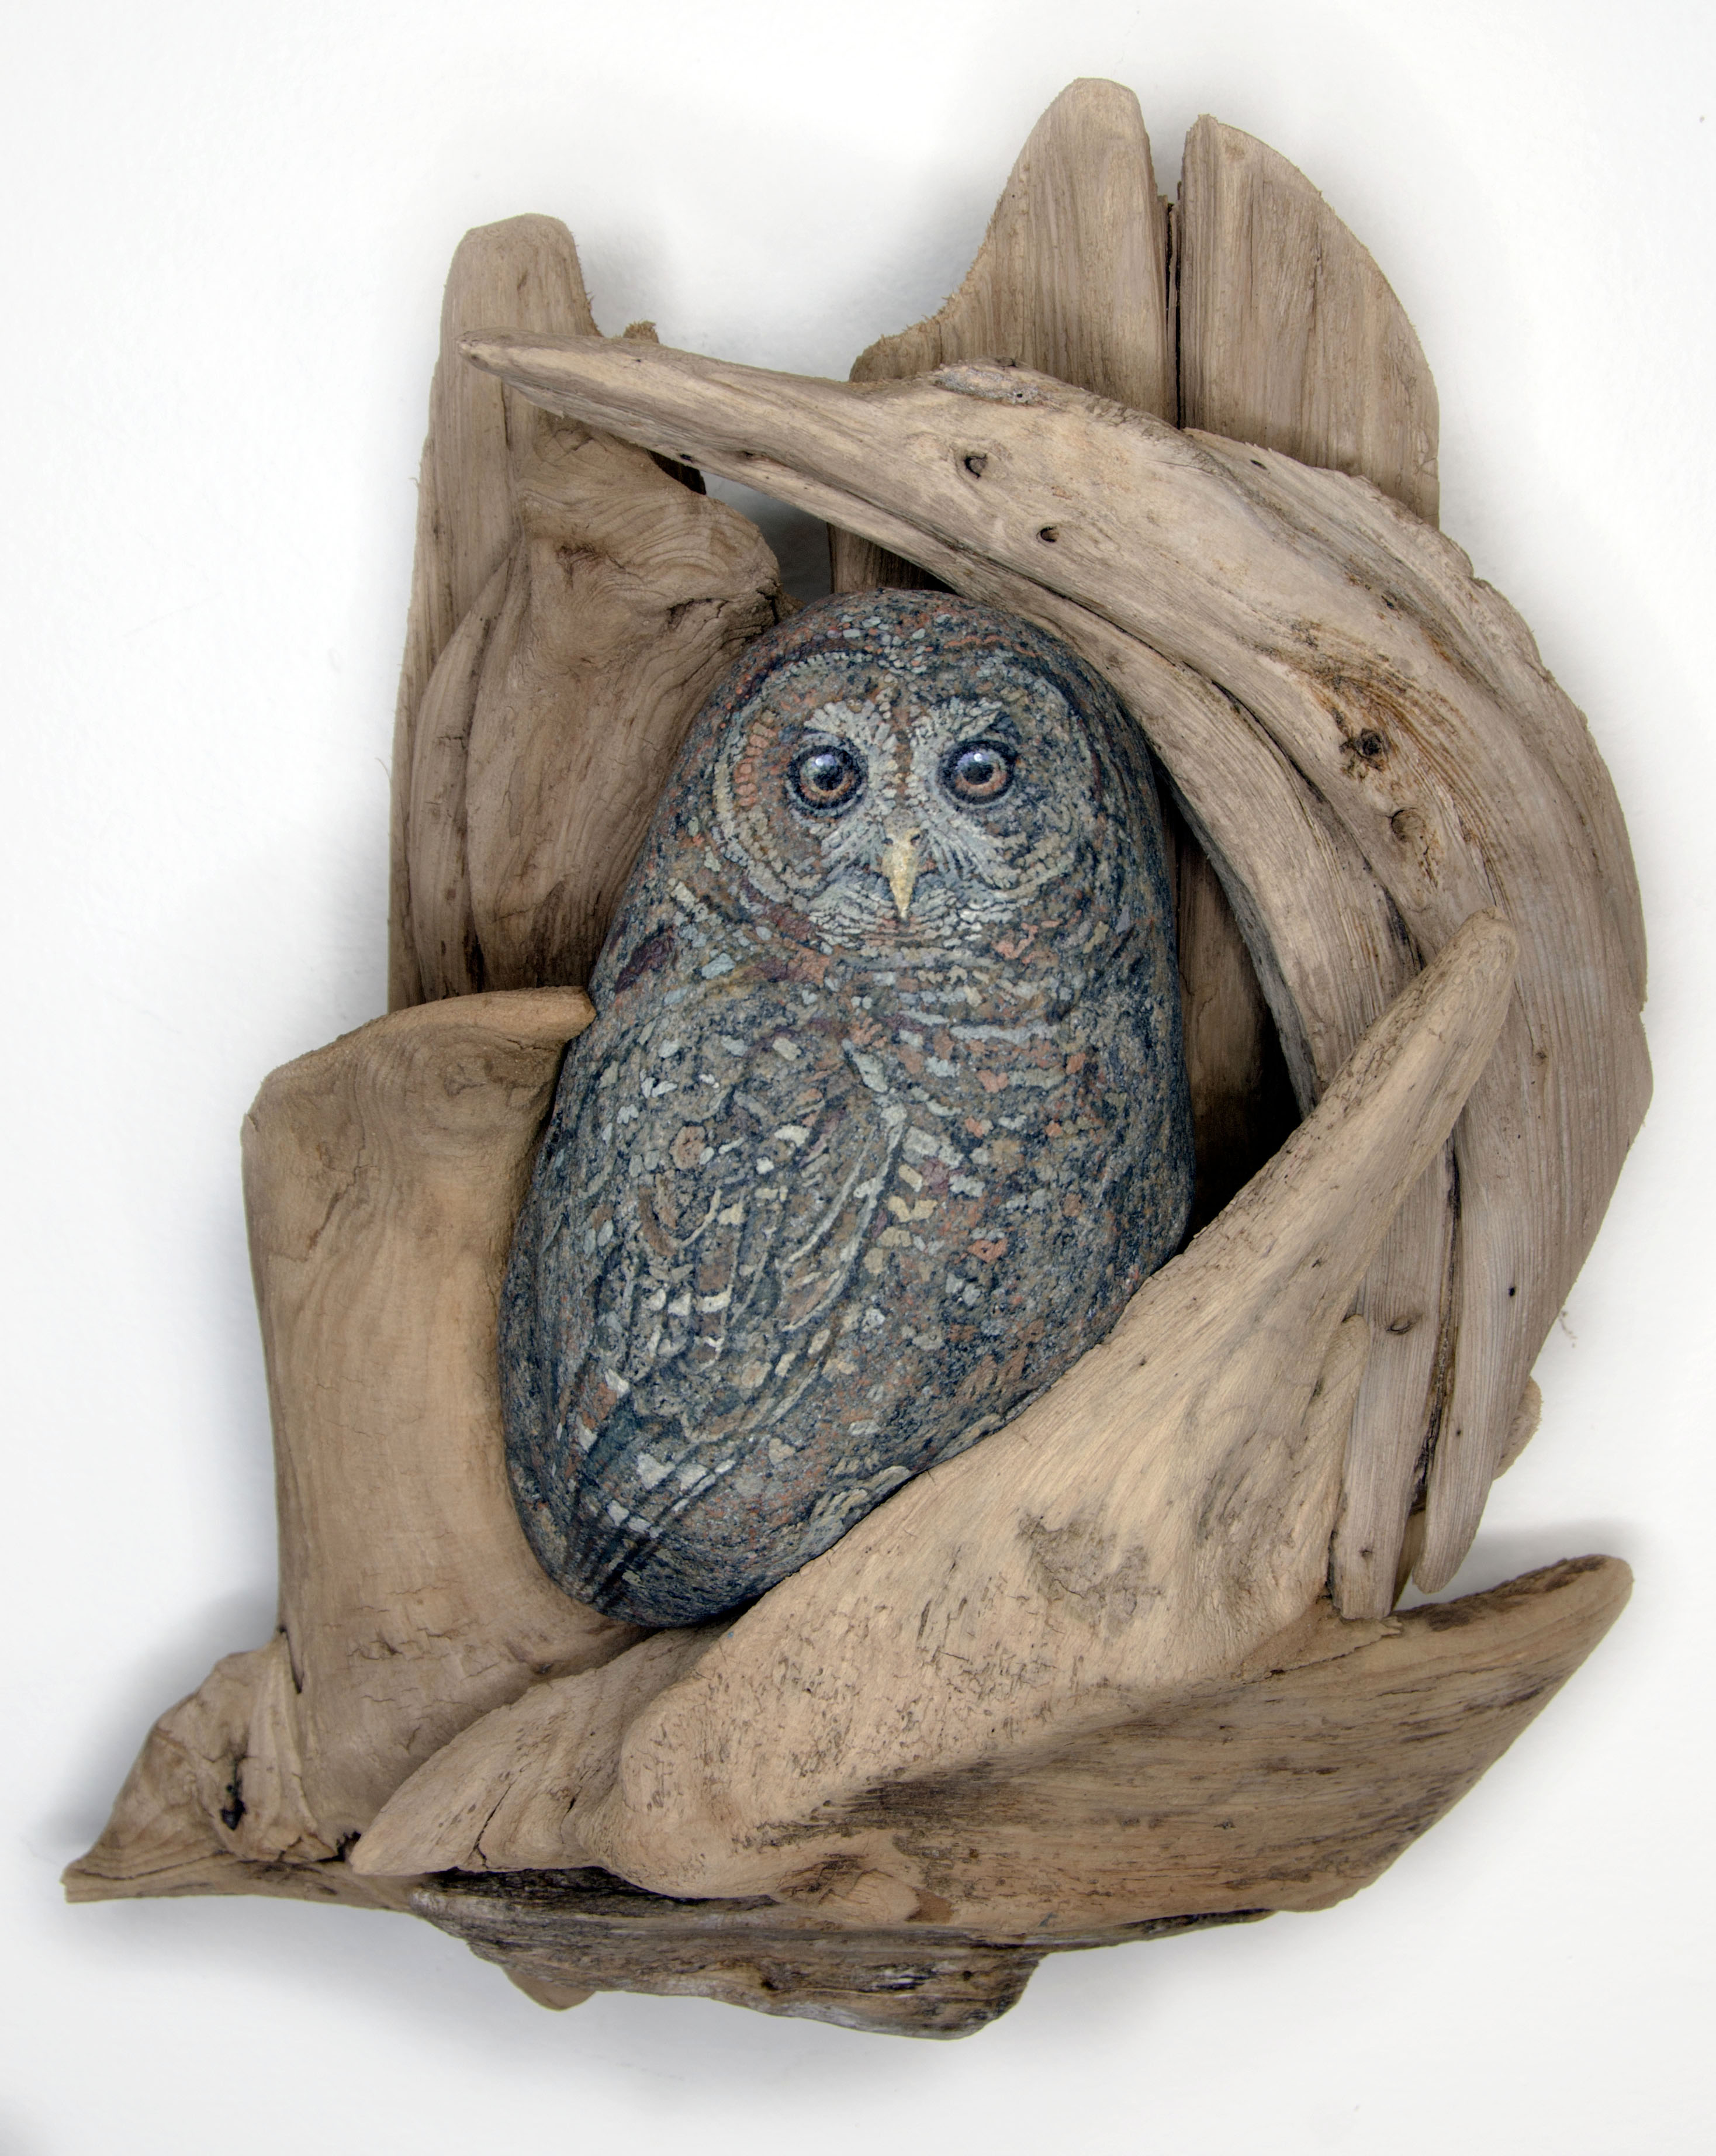 Earth Owl $450.